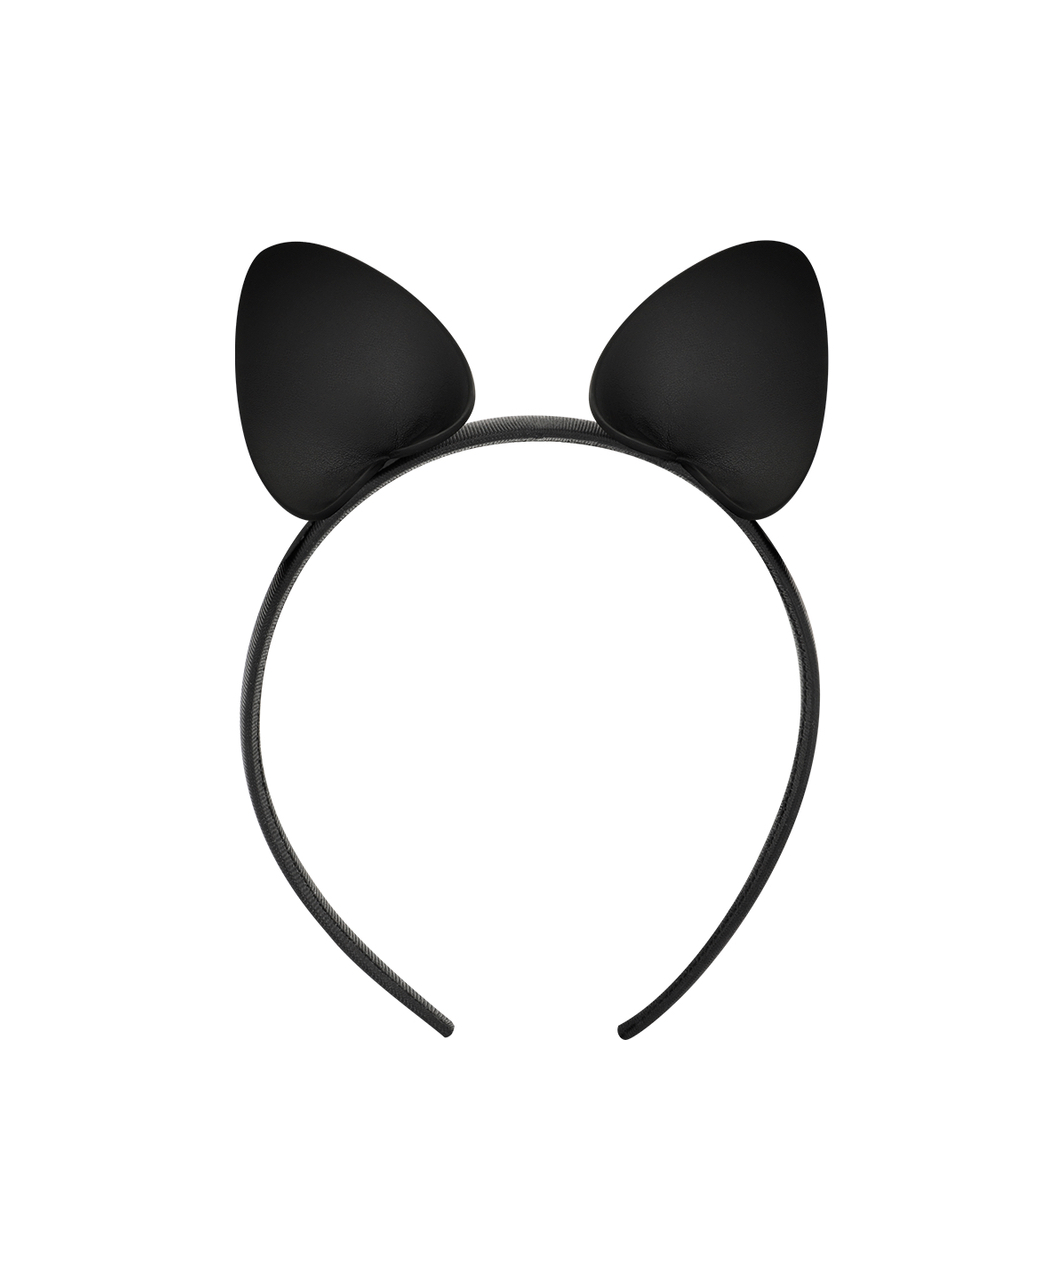 Coquette black leatherette cat ears headband